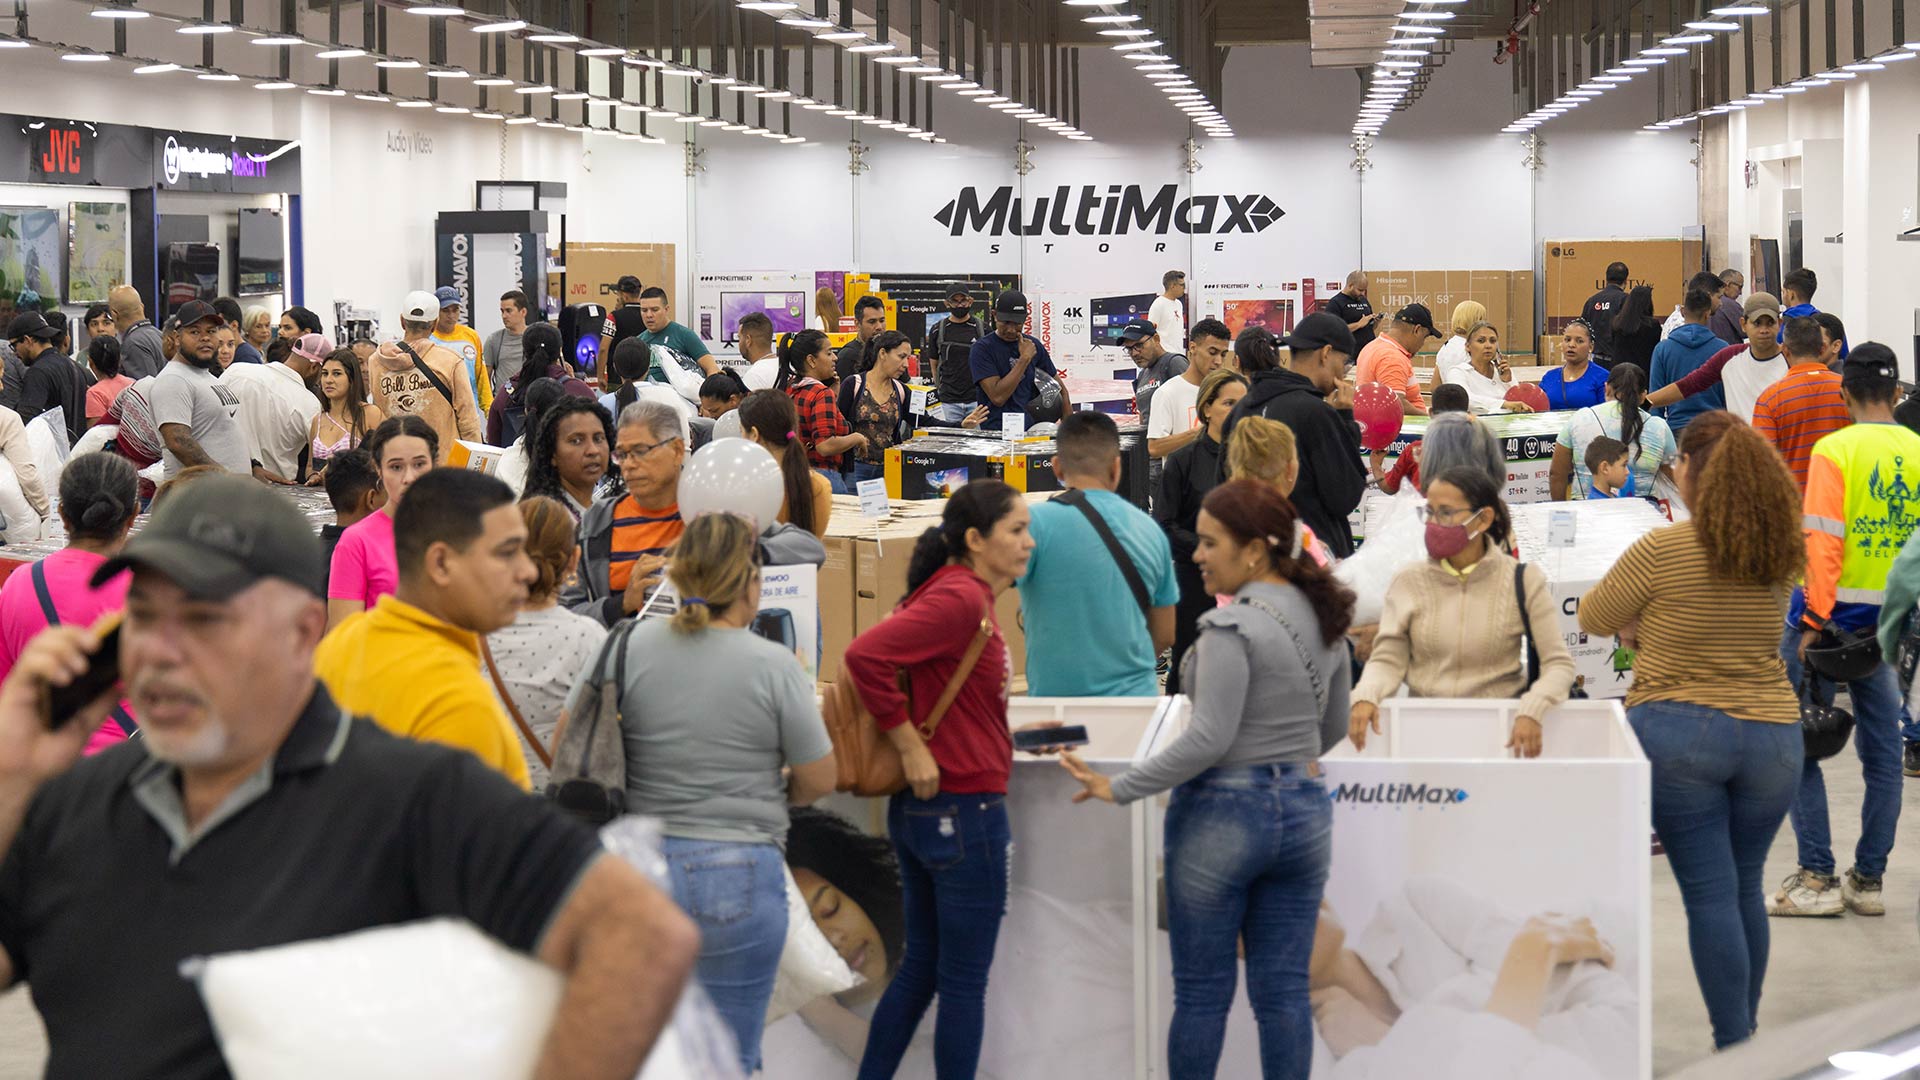 Nueva tienda Multimax en Barquisimeto